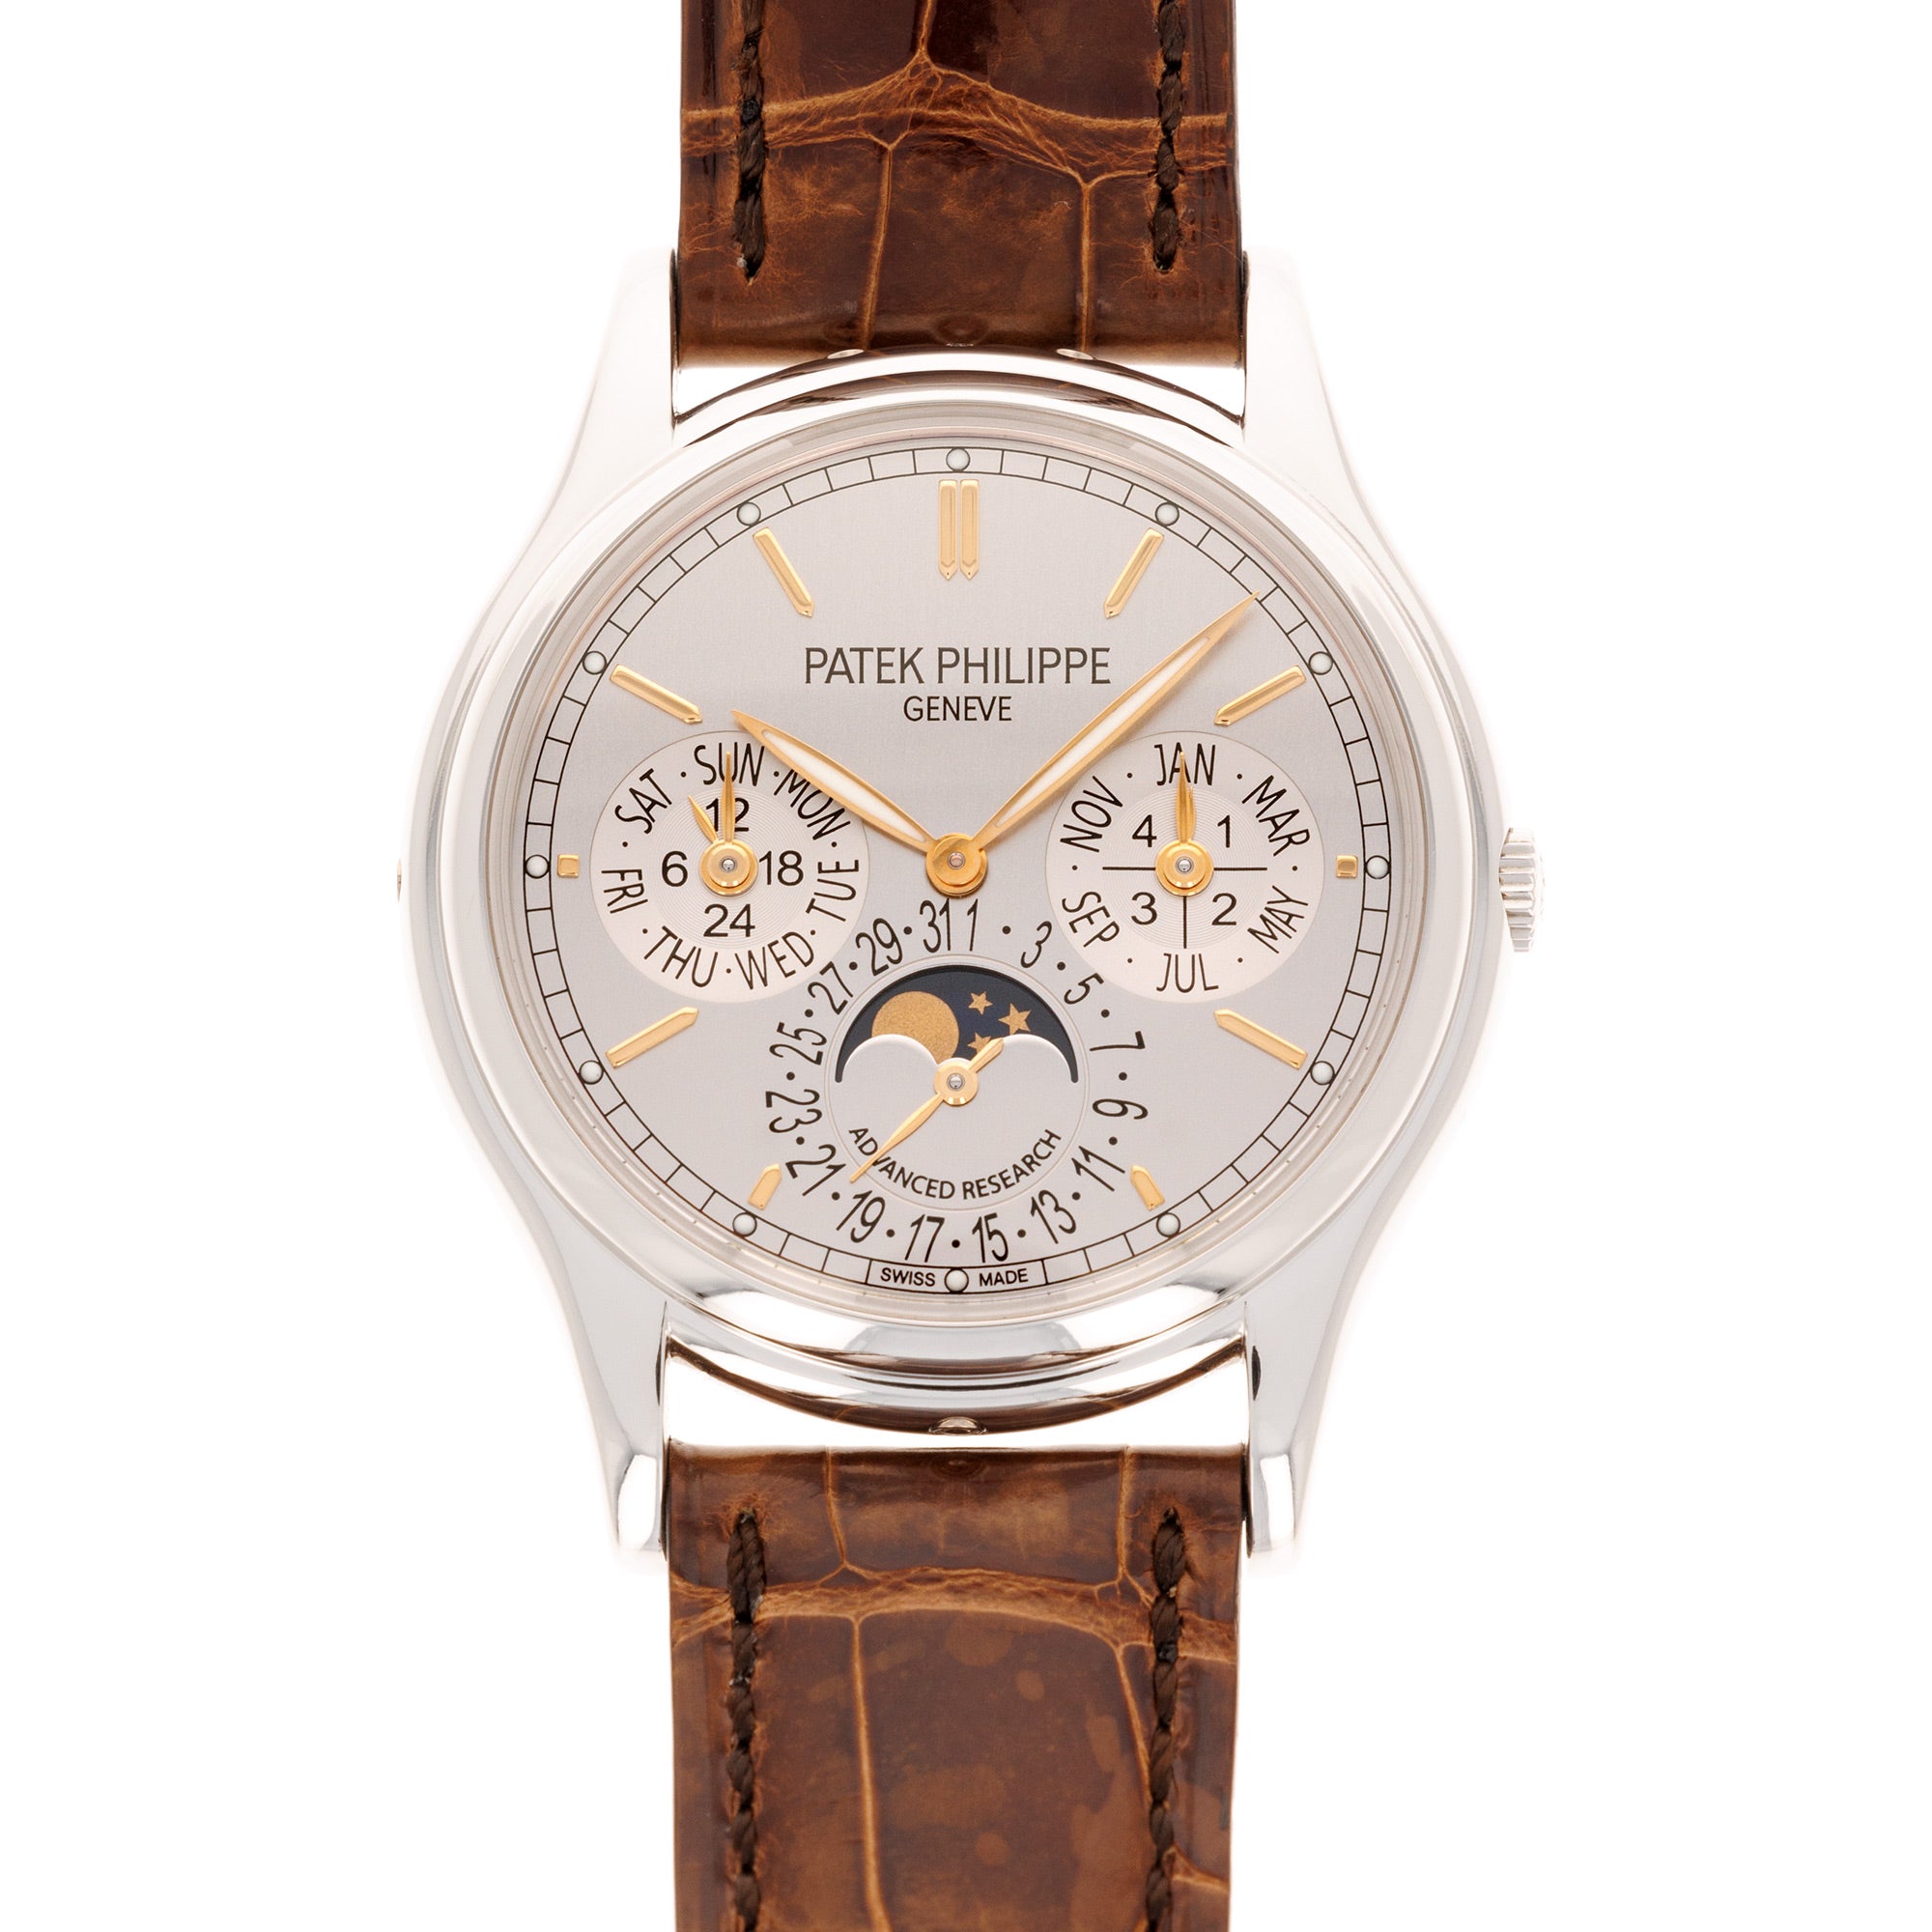 Patek Philippe - Patek Philippe Platinum Advanced Research Ref. 5550 - The Keystone Watches